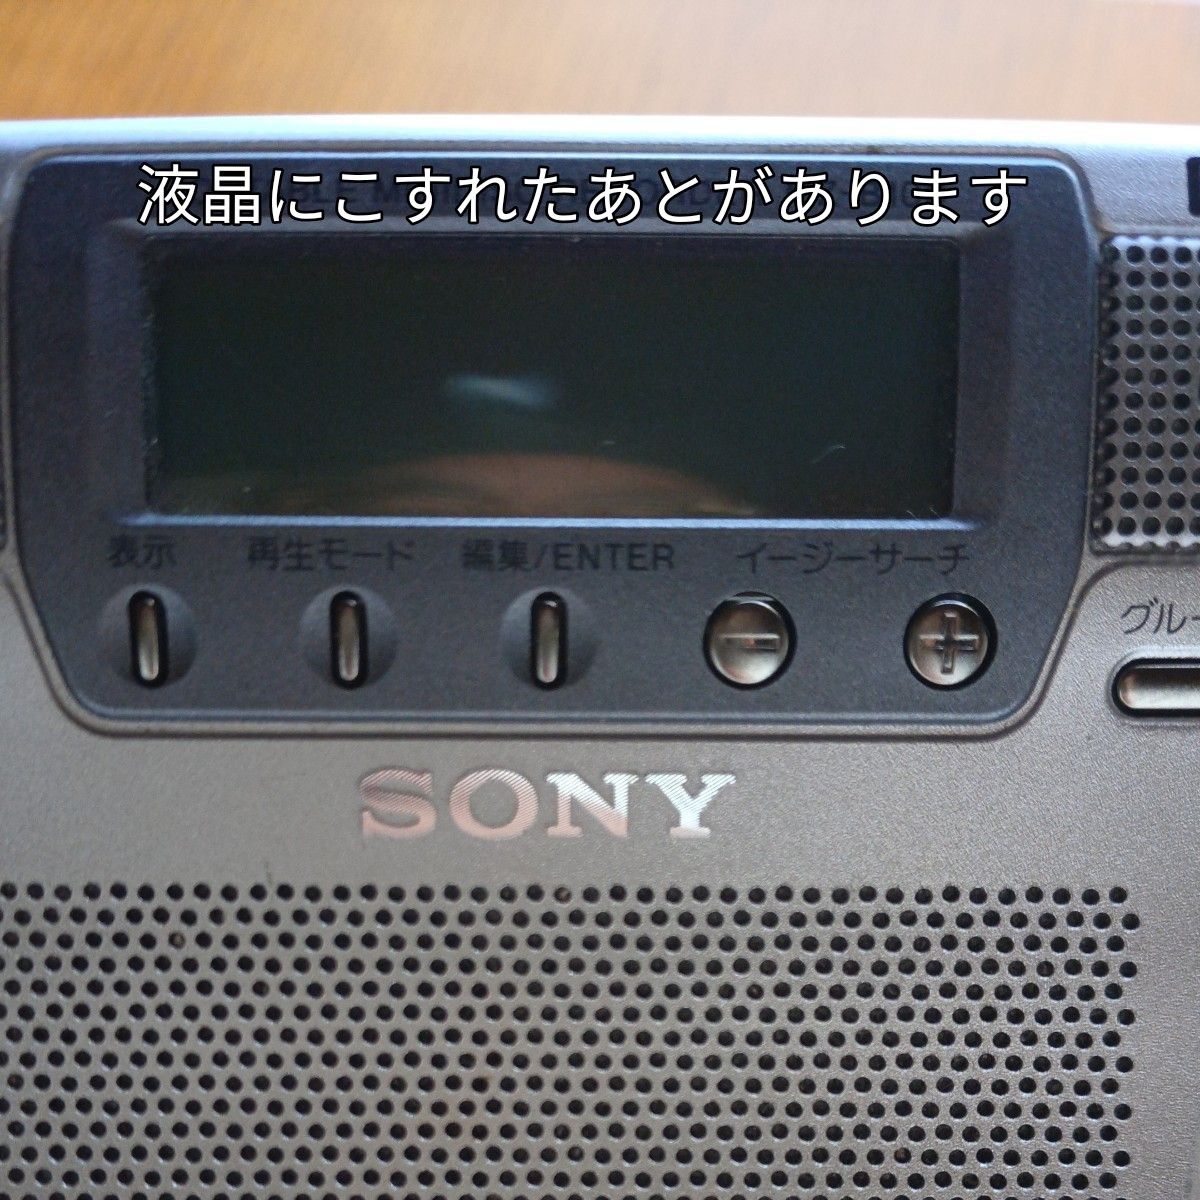 SONY MZ-B100 ソニー ポータブル MDレコーダー MD レコーダー ポータブルMDレコーダー